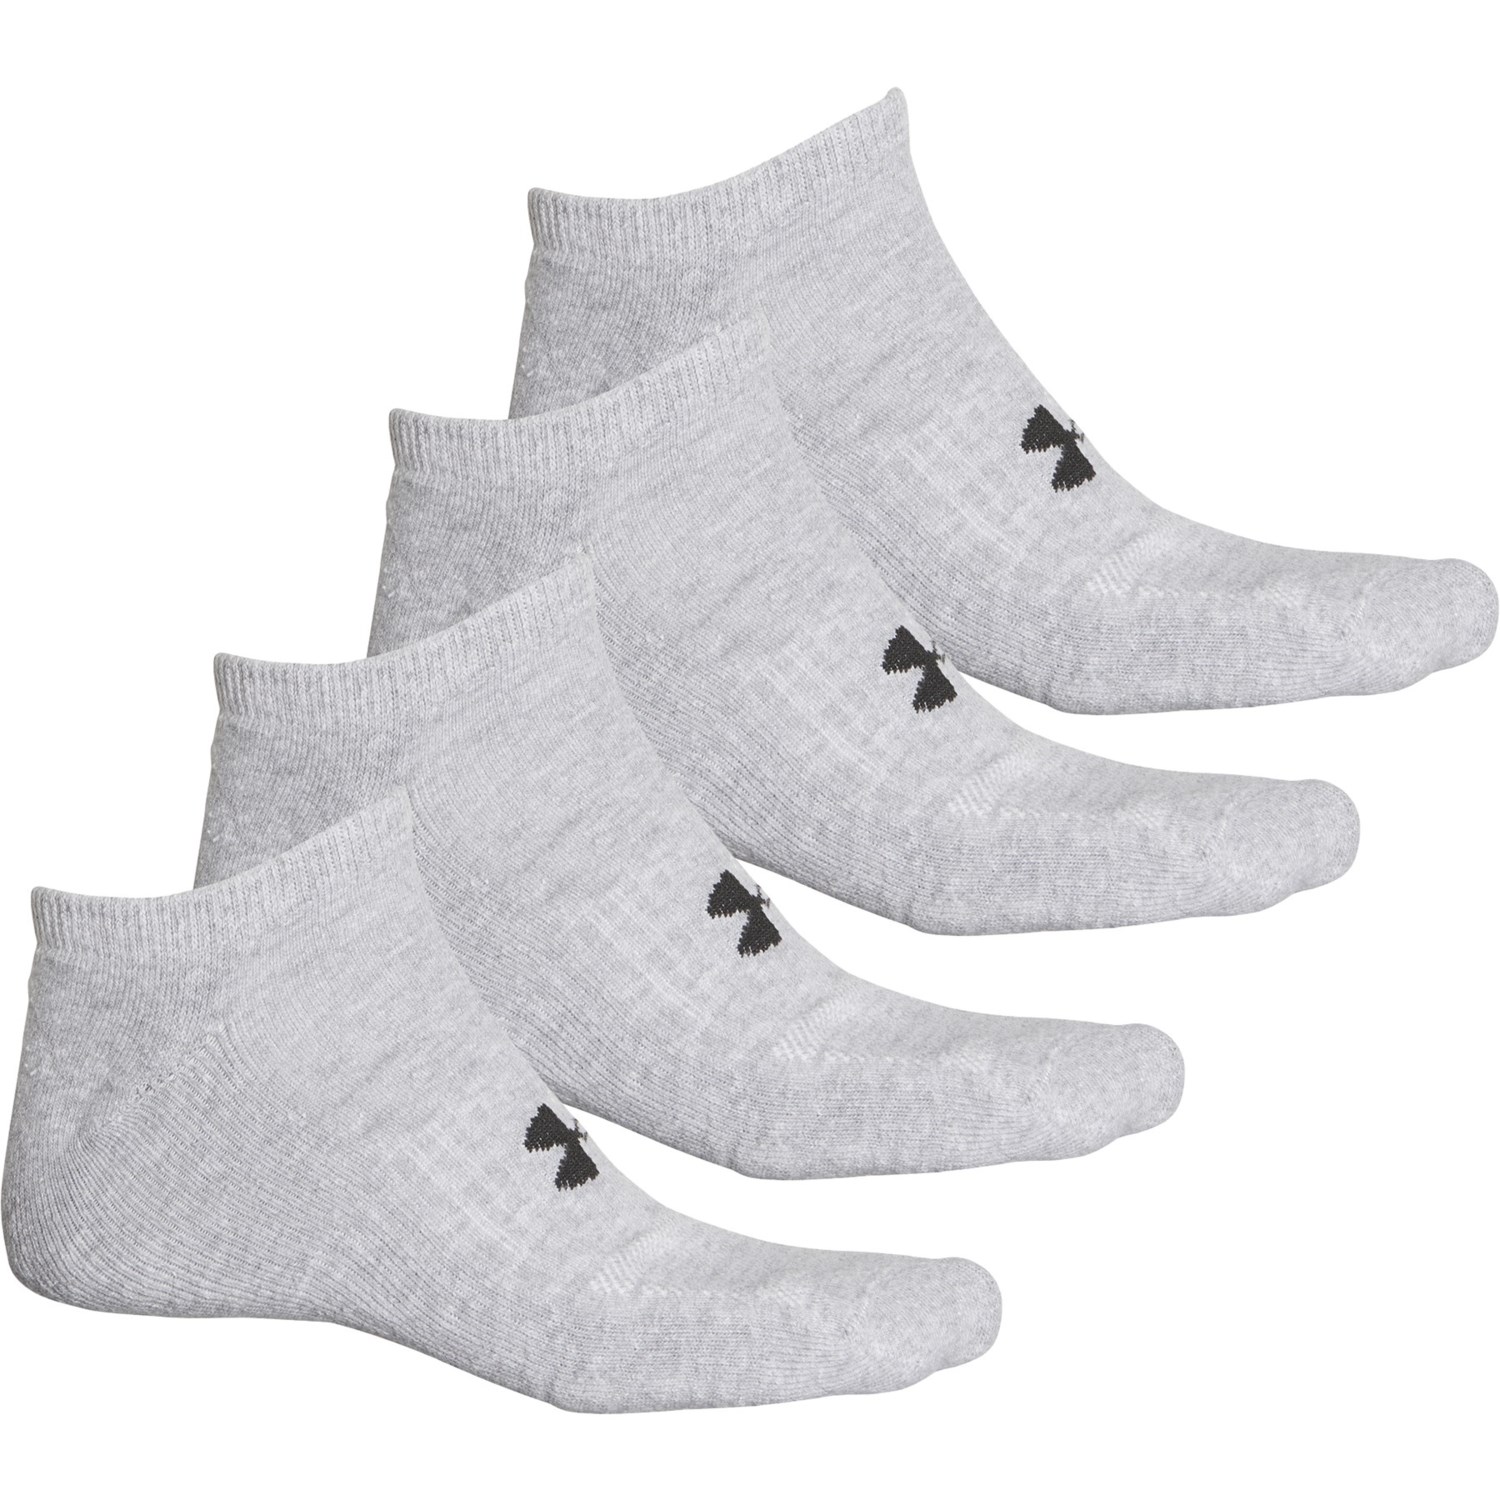 Under Armour AllSeasonGear No-Show Socks - 4-Pack, Below the Ankle (For Men)